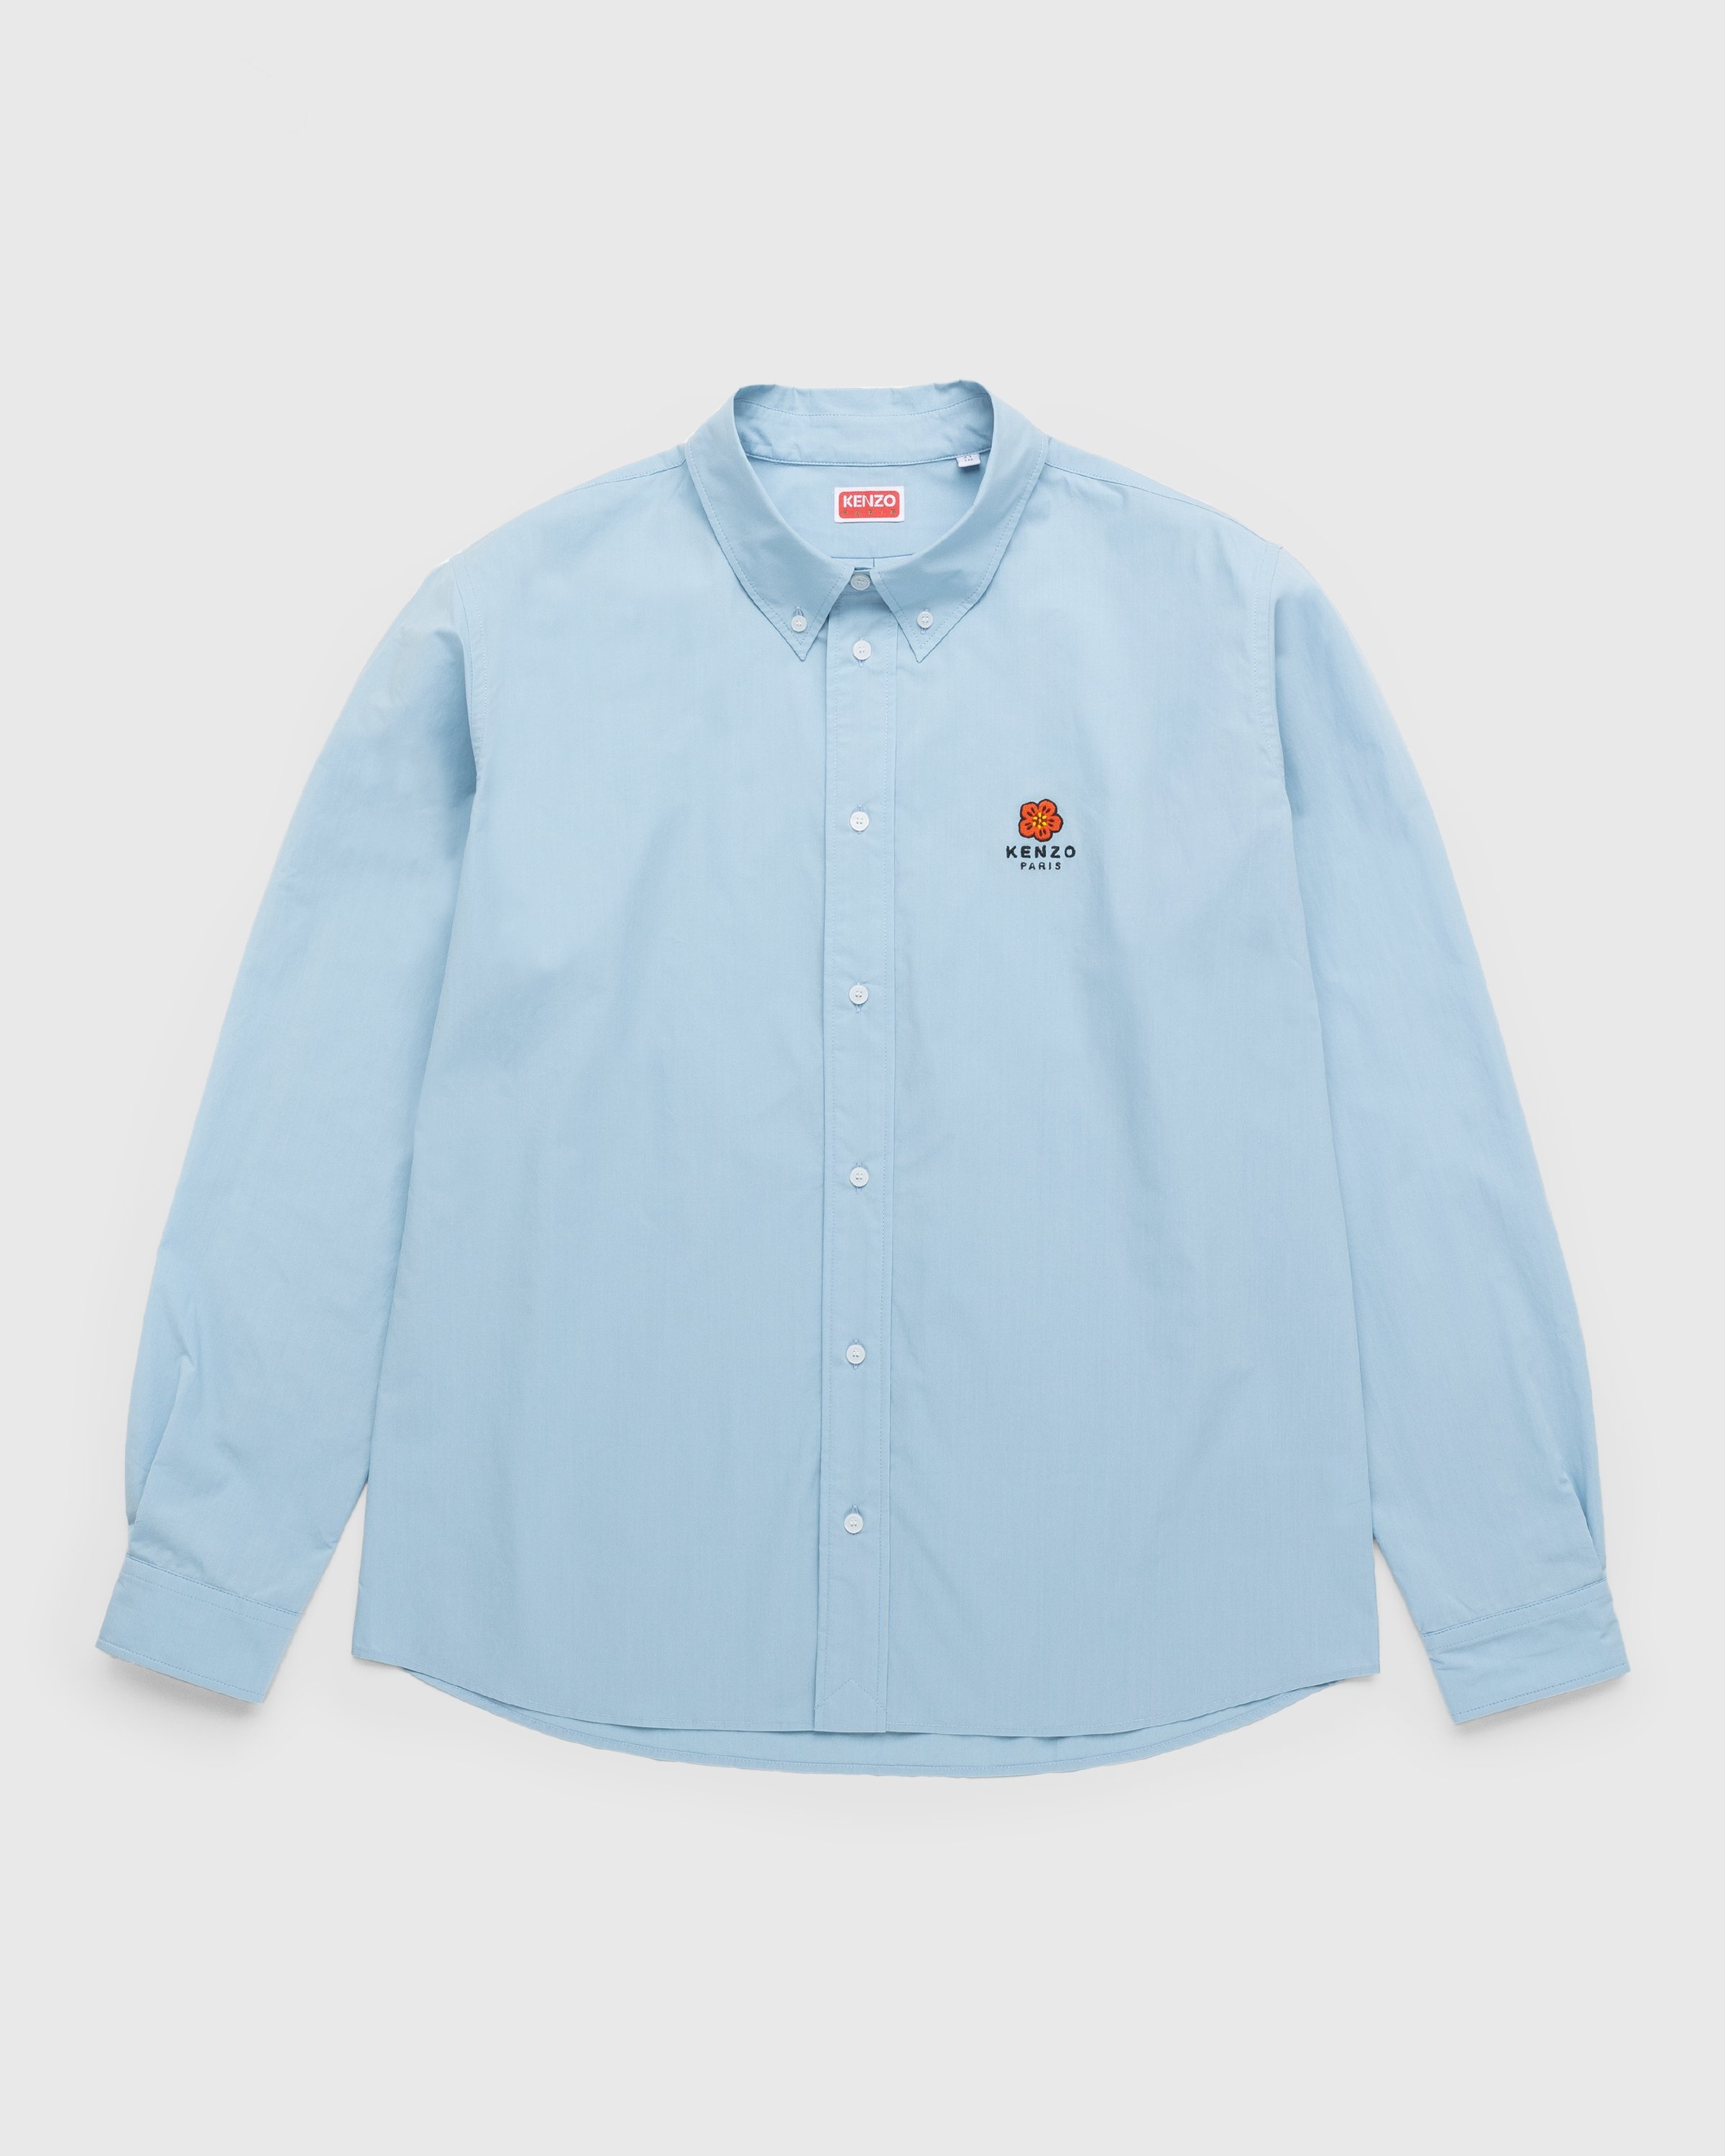 Kenzo – Shirt Sky Blue - Shirts - Blue - Image 1